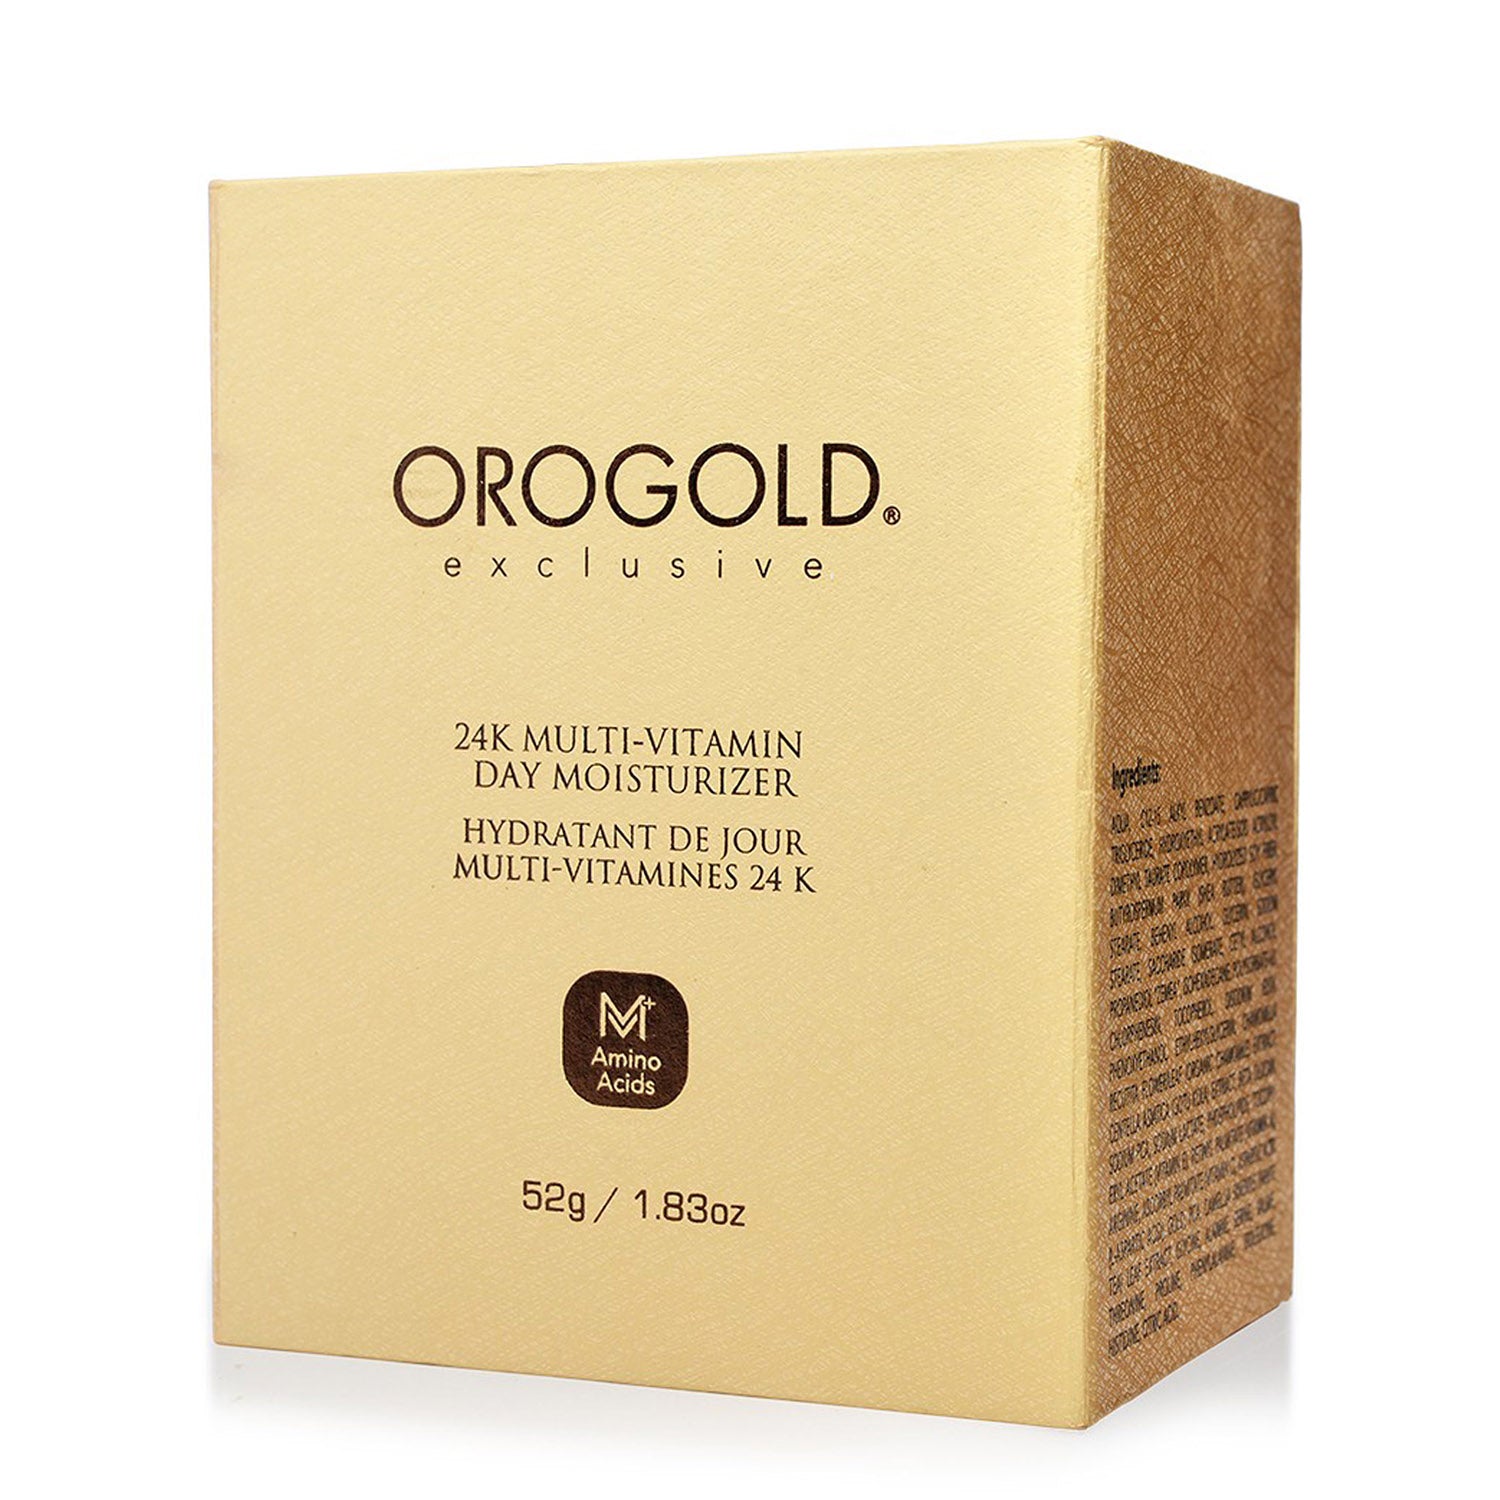 orogold multi-vitamin day moisturizer + amino acid